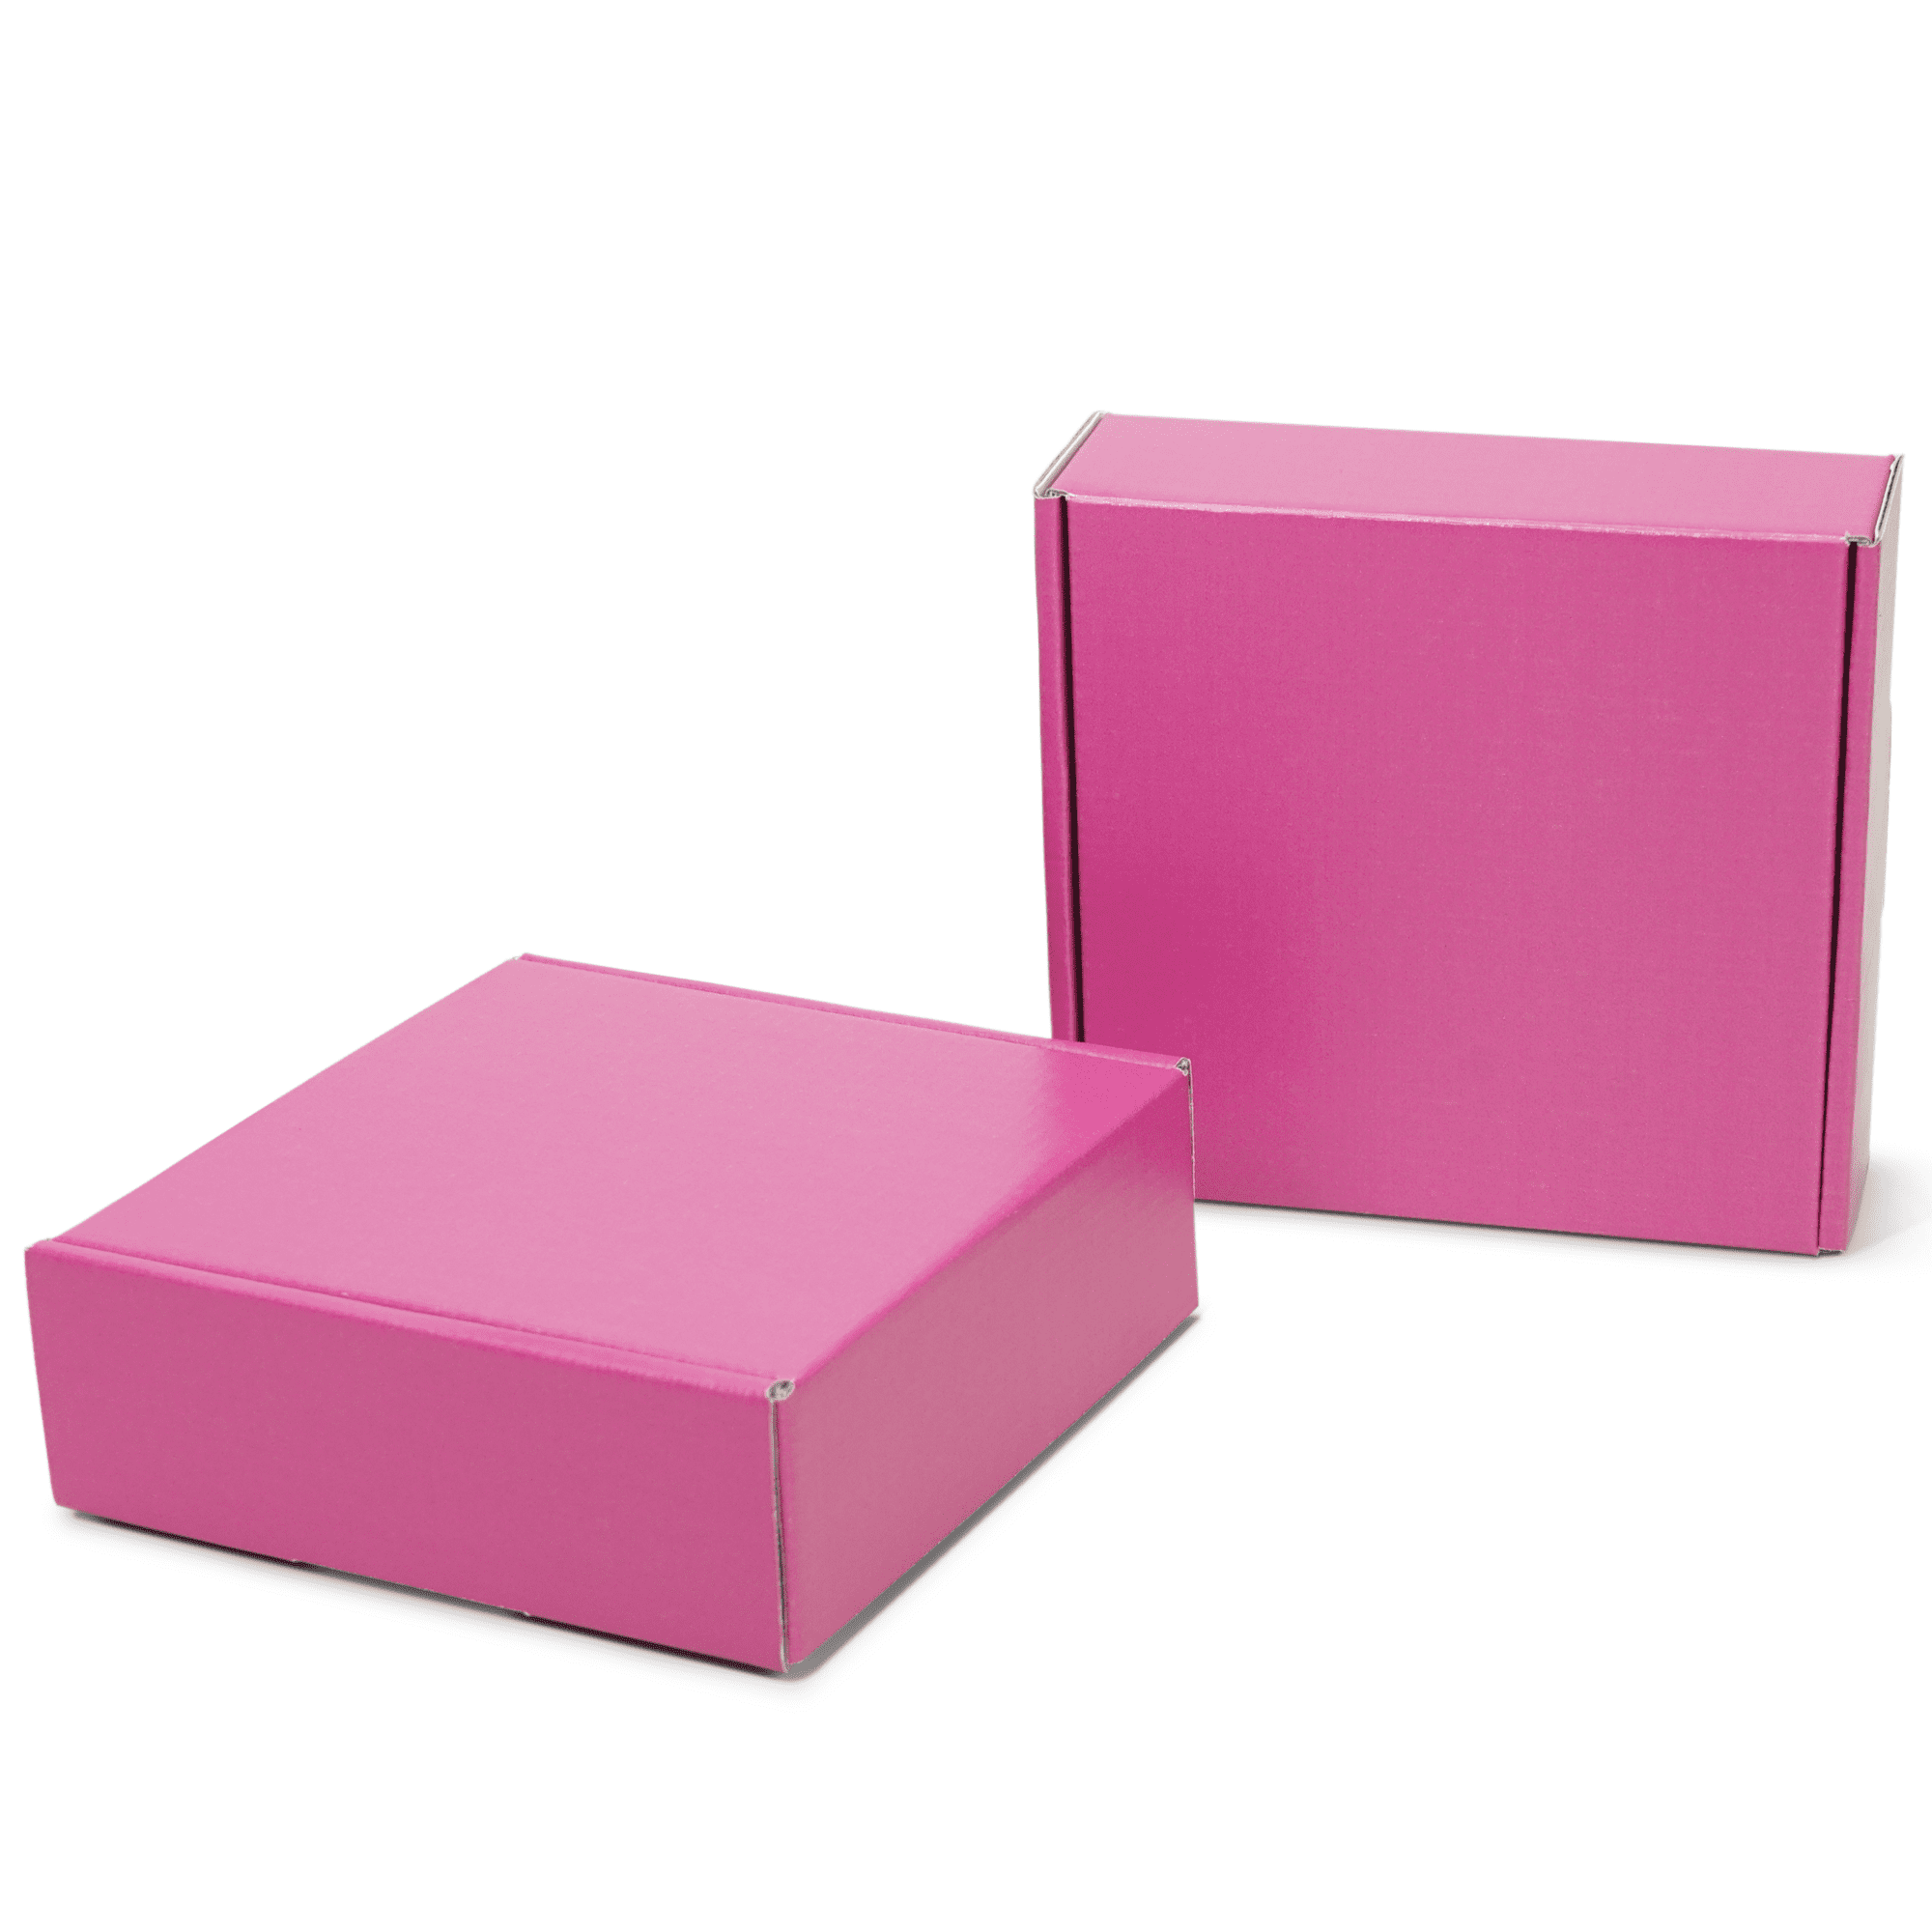 pink travel box